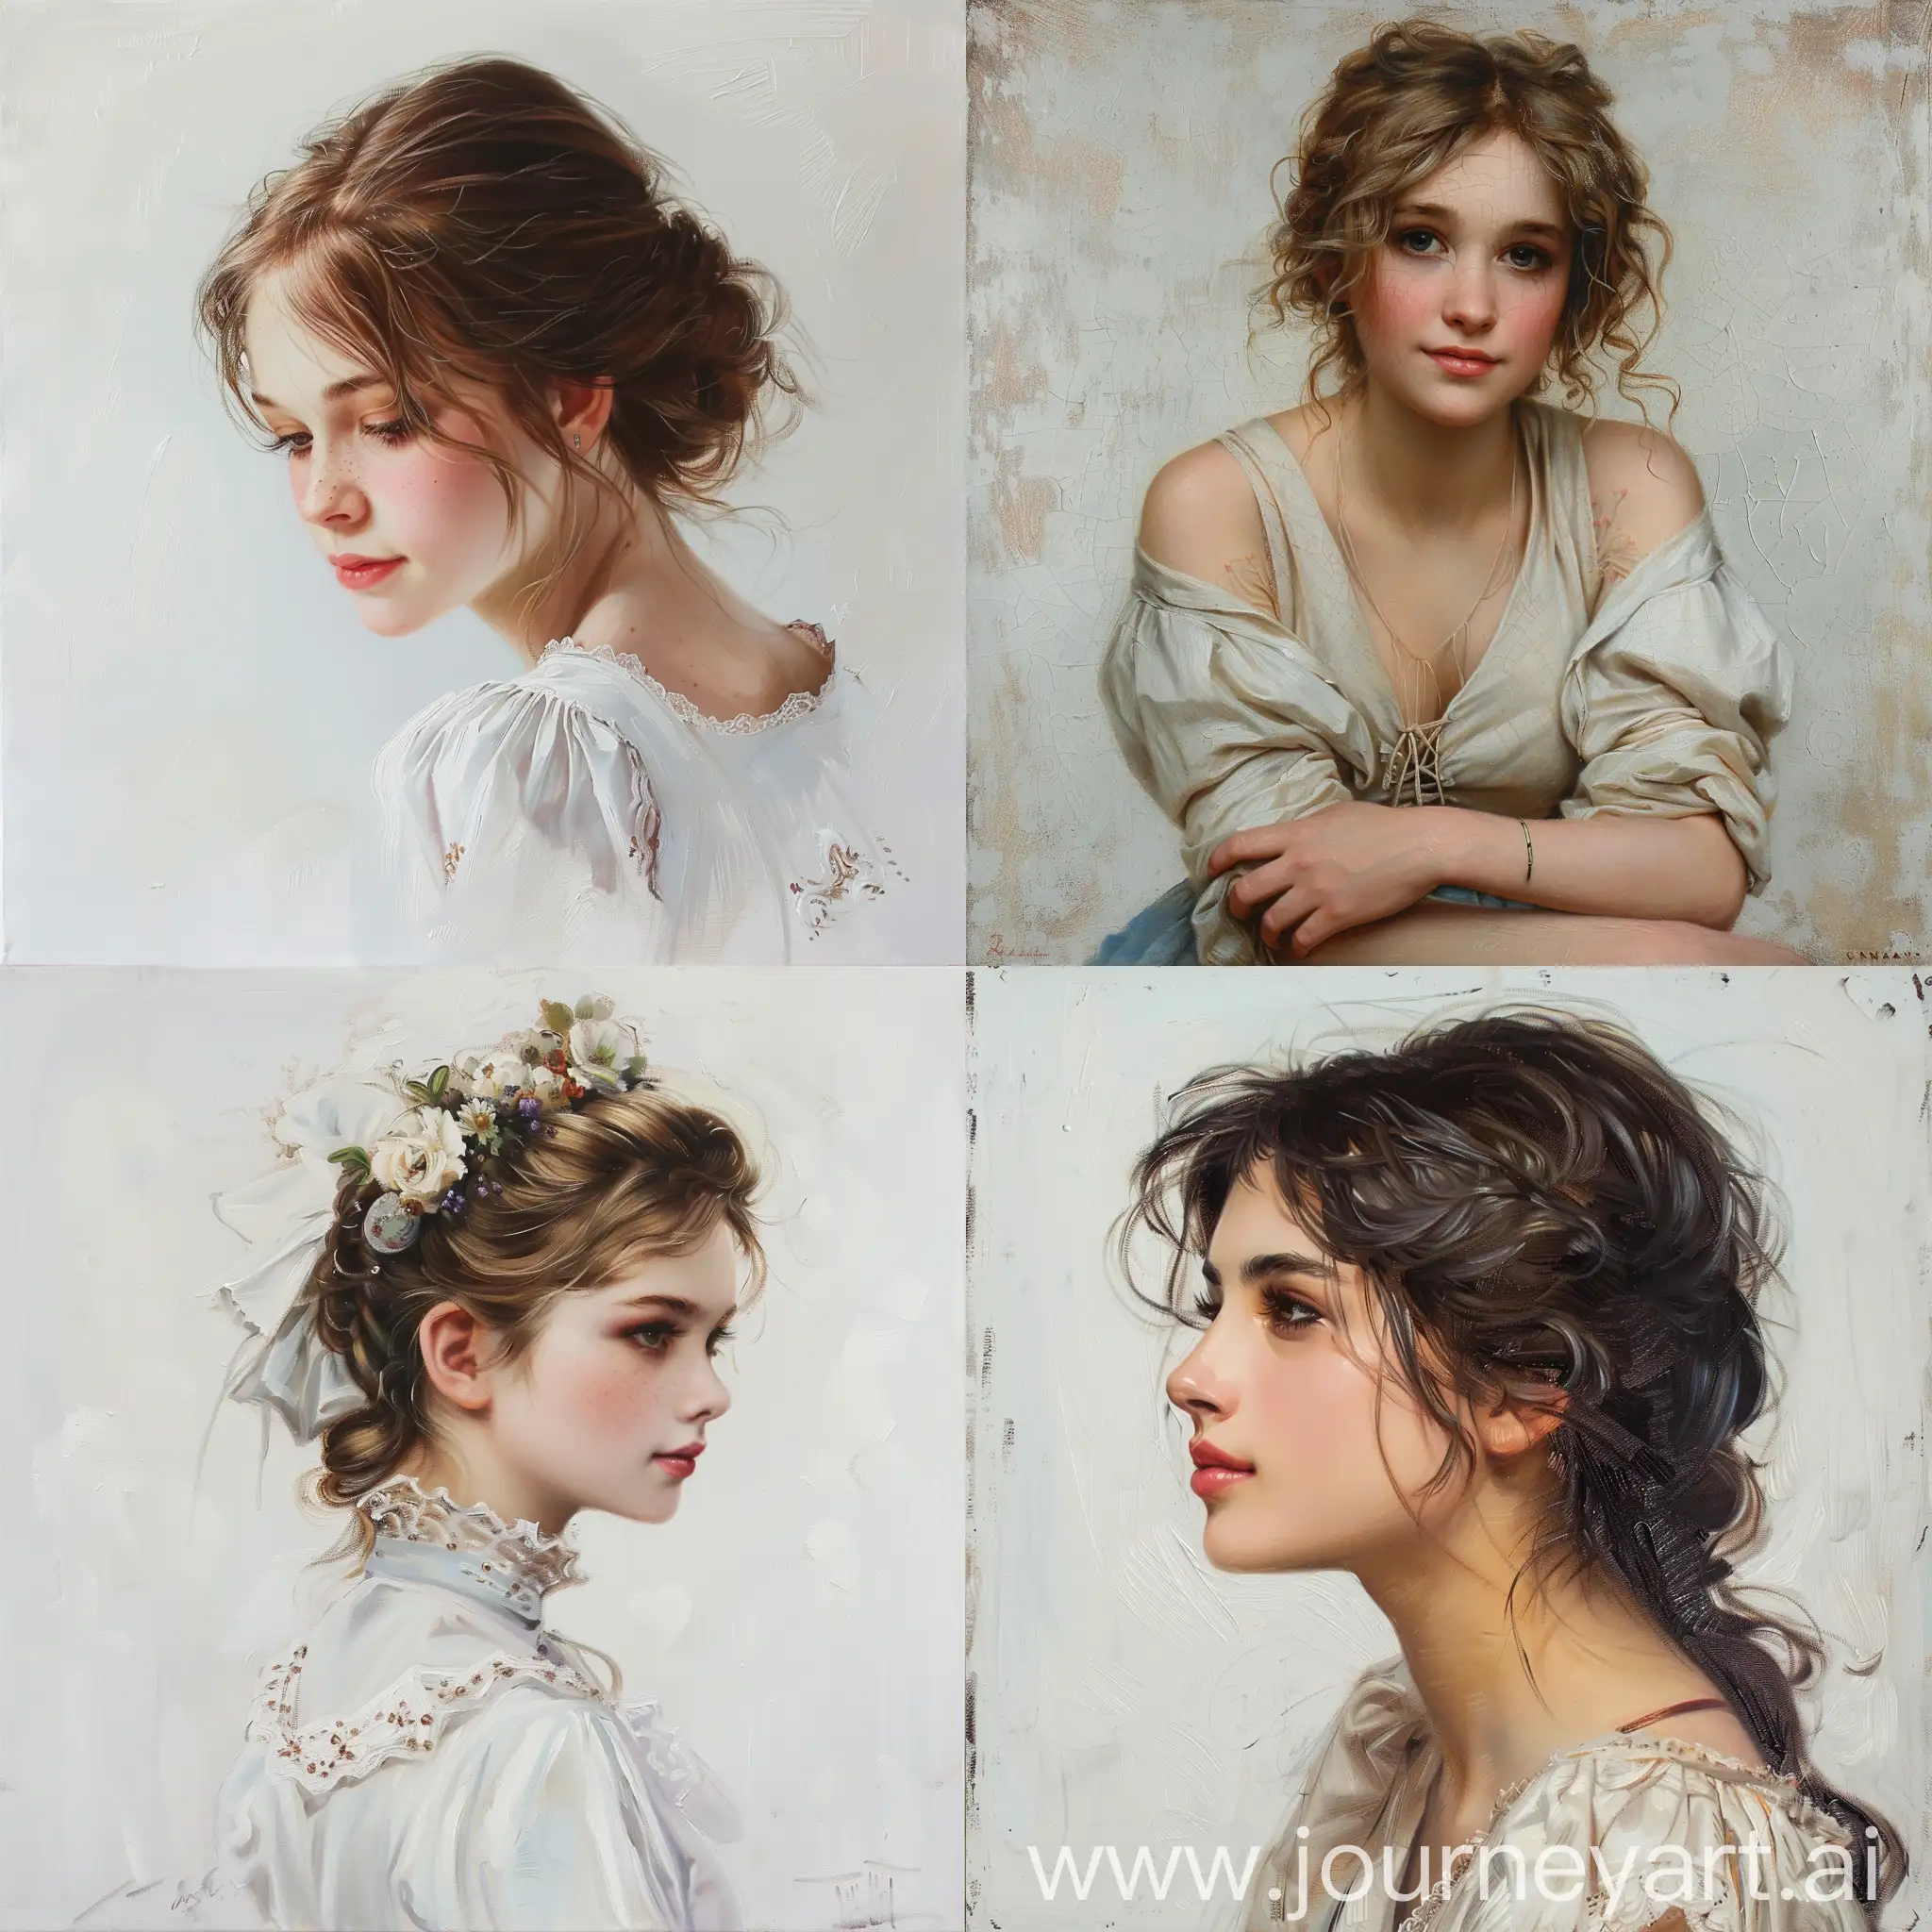 white background, girl, romantic era, painting